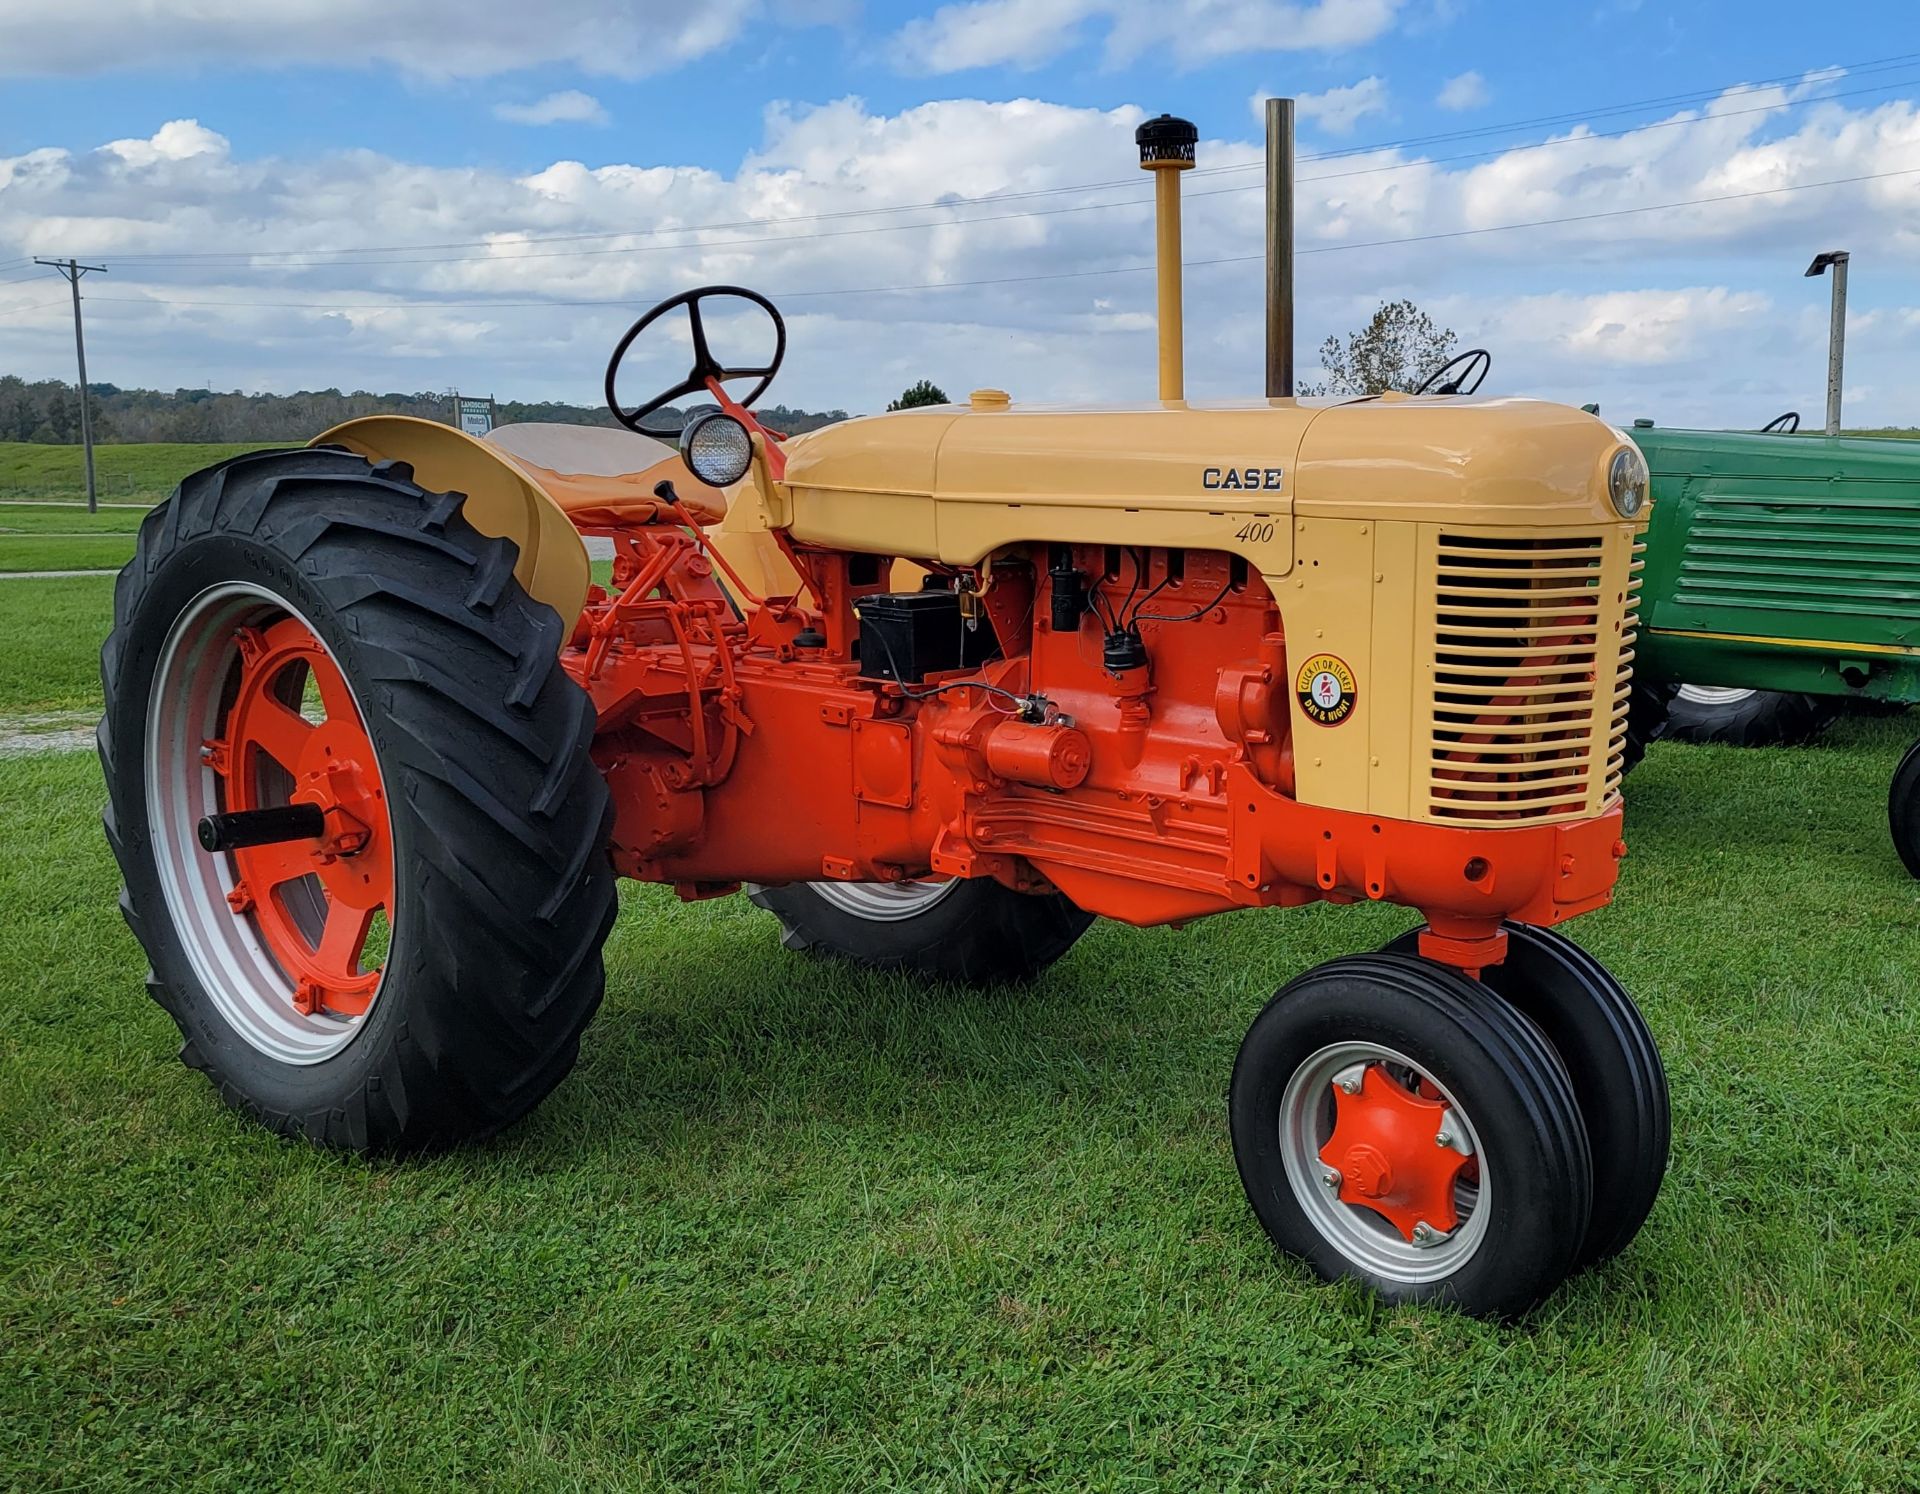 1956 Case 400 Row Crop Tractor, Model 411, s/n 8081224, Gasoline Engine, New in 1956, Restored